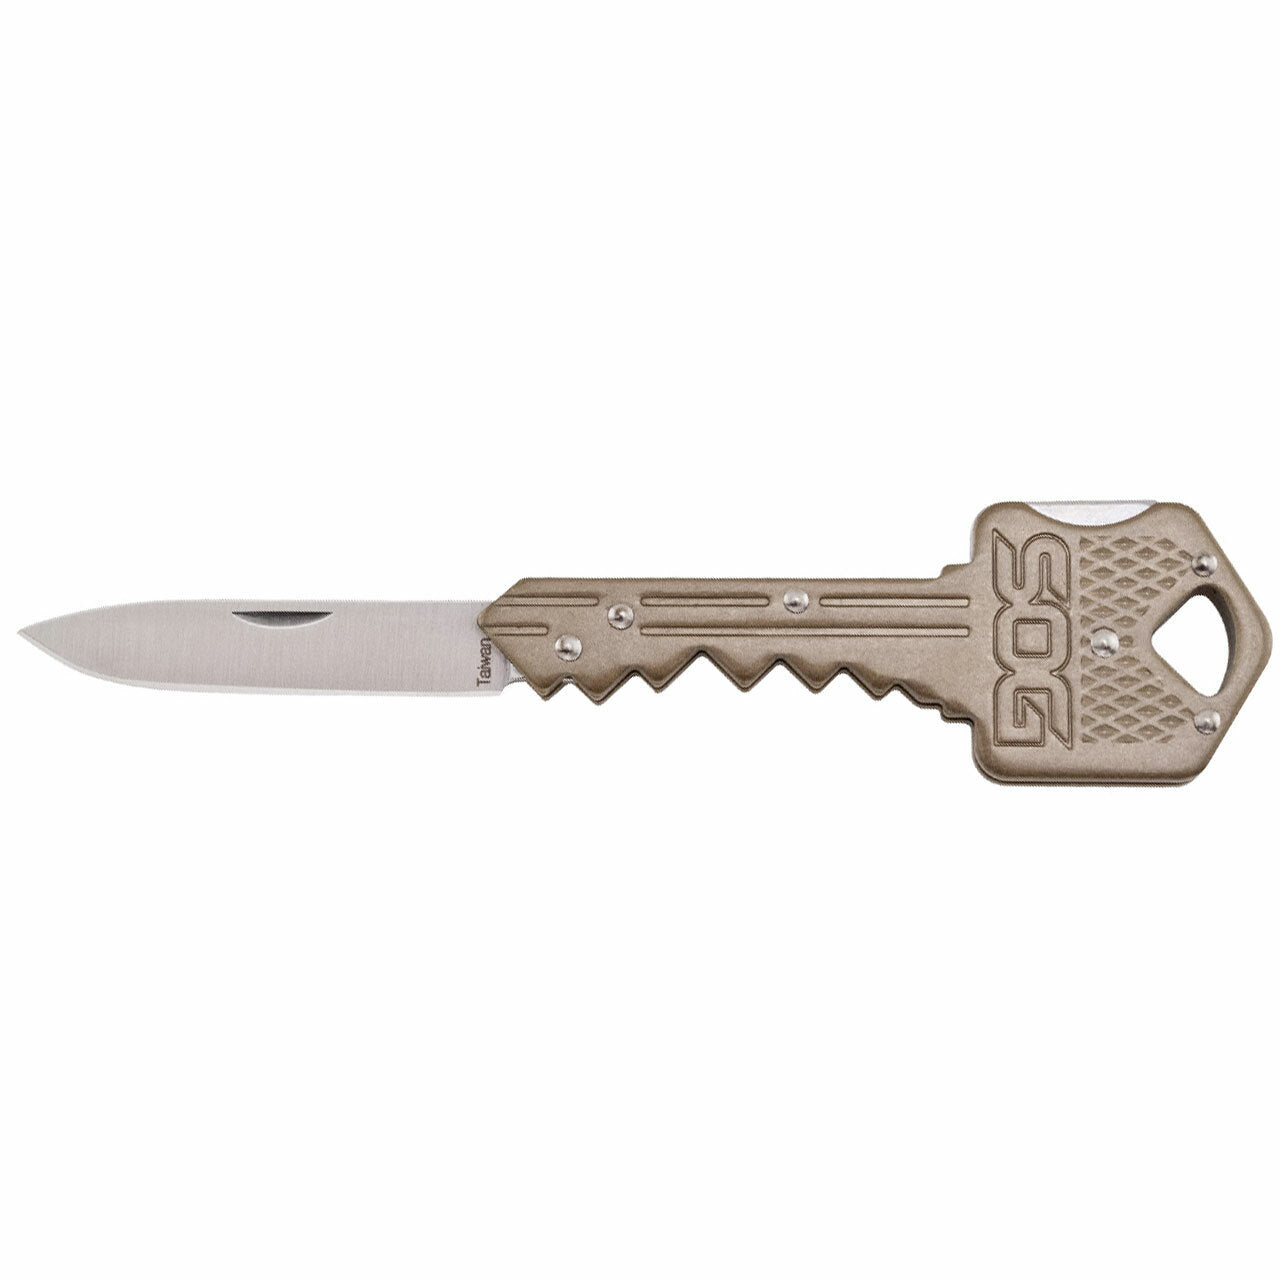 SOG Key Knife – Brass Handle | SOG Knives